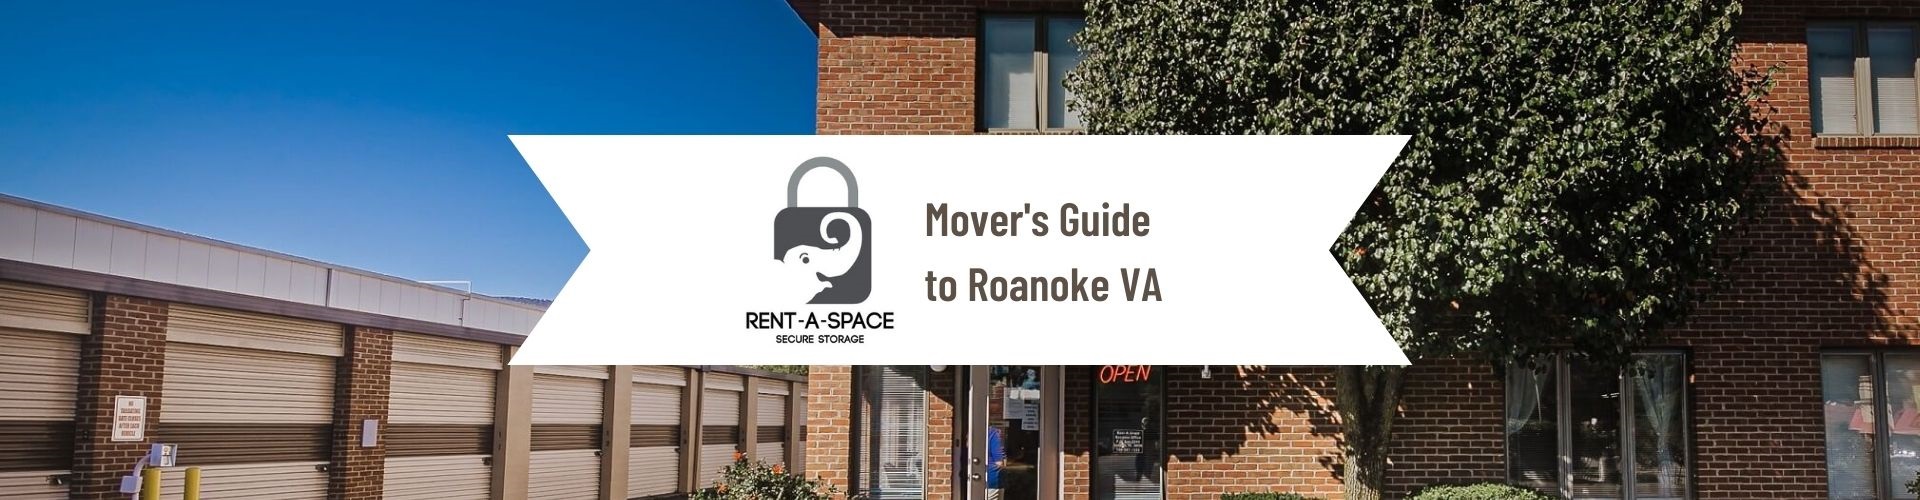 Mover's Guide Roanoke VA